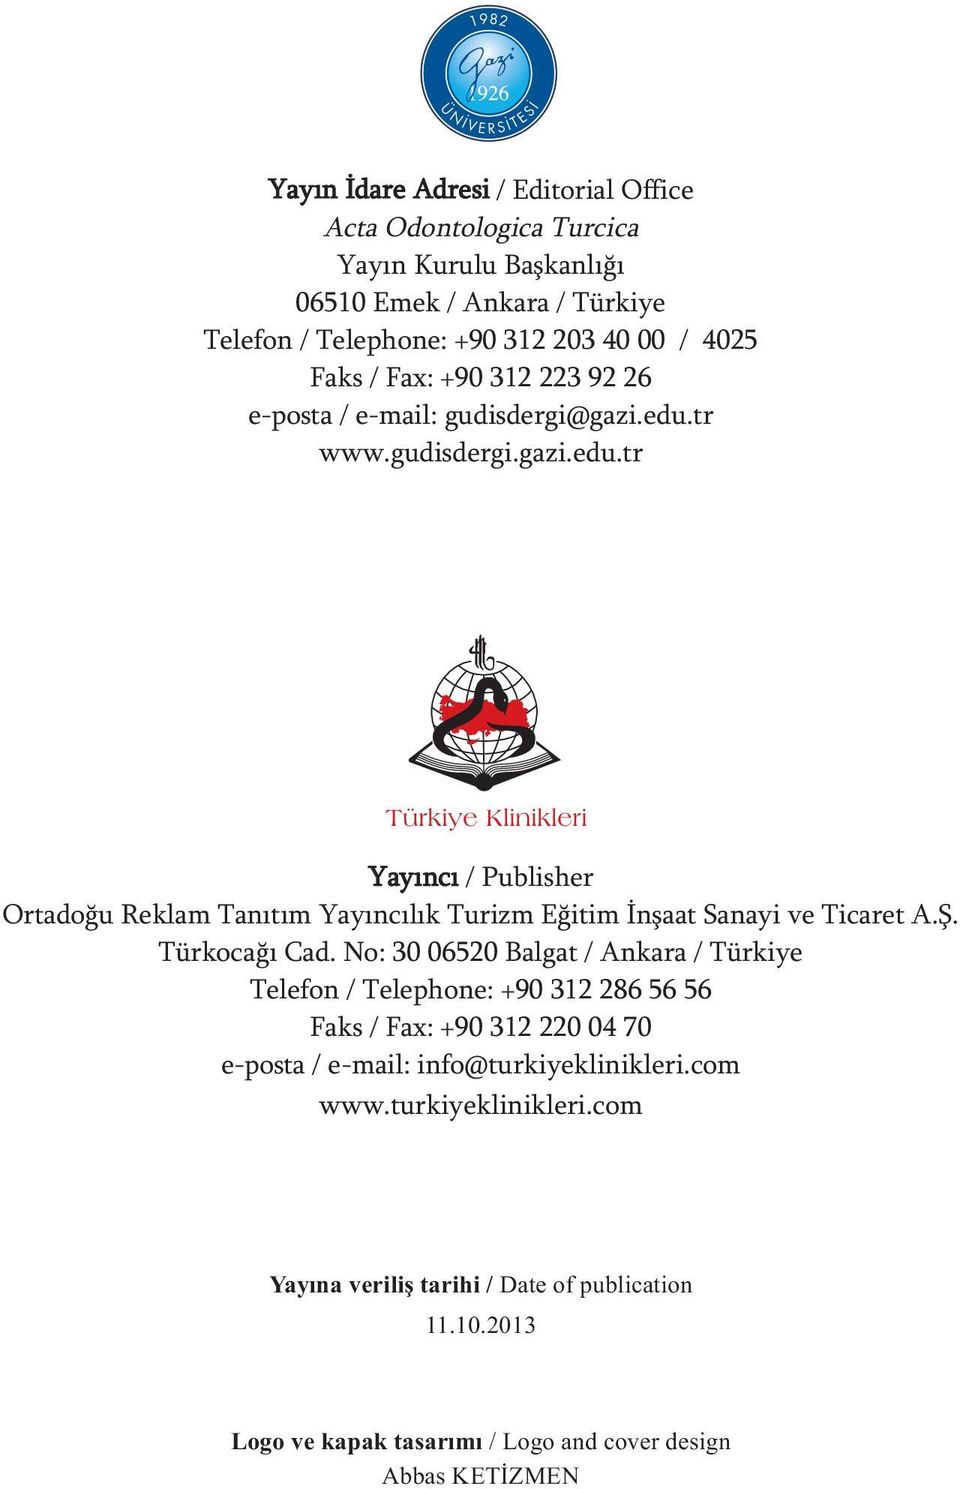 Ş. Türkocağı Cad. No: 30 06520 Balgat / Ankara / Türkiye Telefon / Telephone: +90 312 286 56 56 Faks / Fax: +90 312 220 04 70 e-posta / e-mail: info@turkiyeklinikleri.com www.